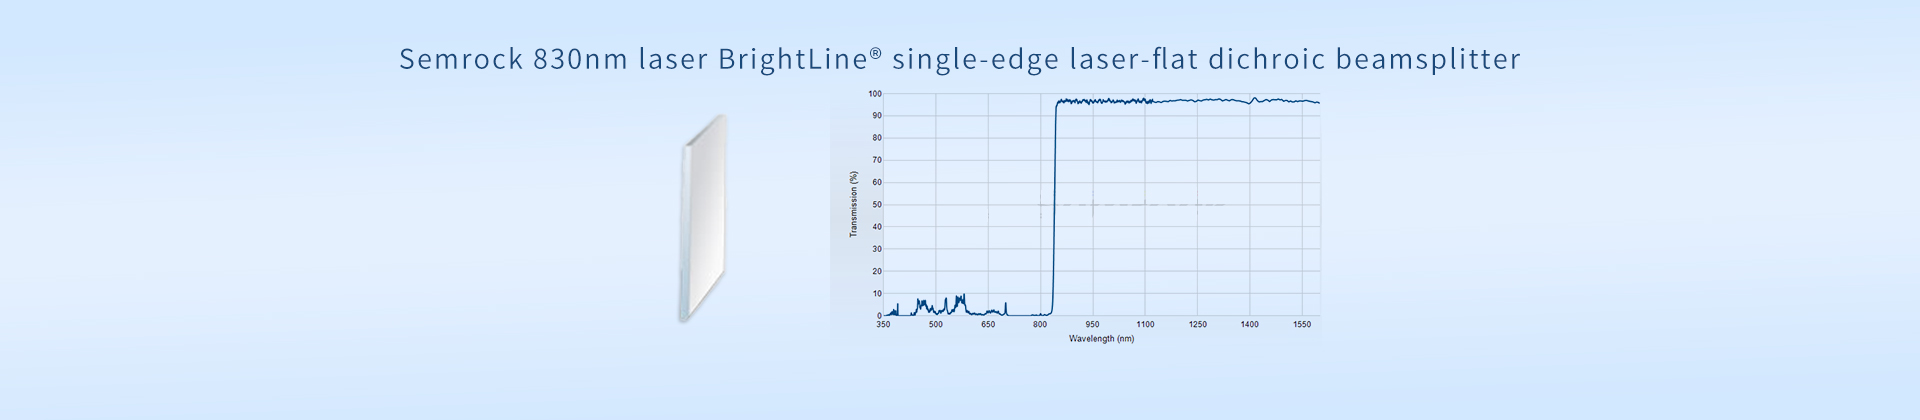 Semrock 830nm laser BrightLine® single-edge laser-flat dichroic beamsplitter